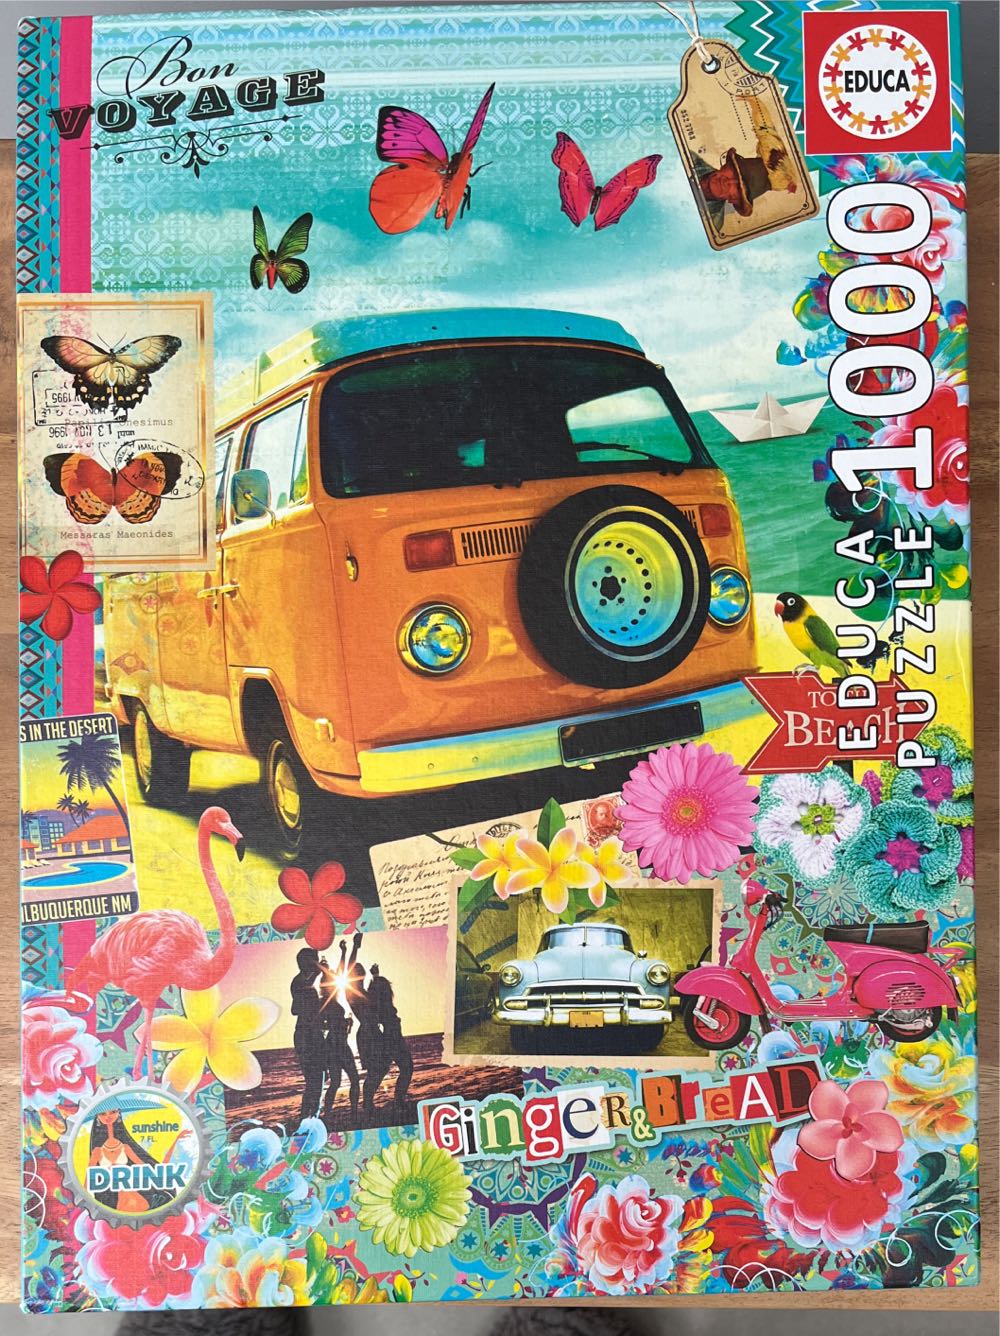 Bon Voyage - Educa puzzle collectible [Barcode 8412668171039] - Main Image 1